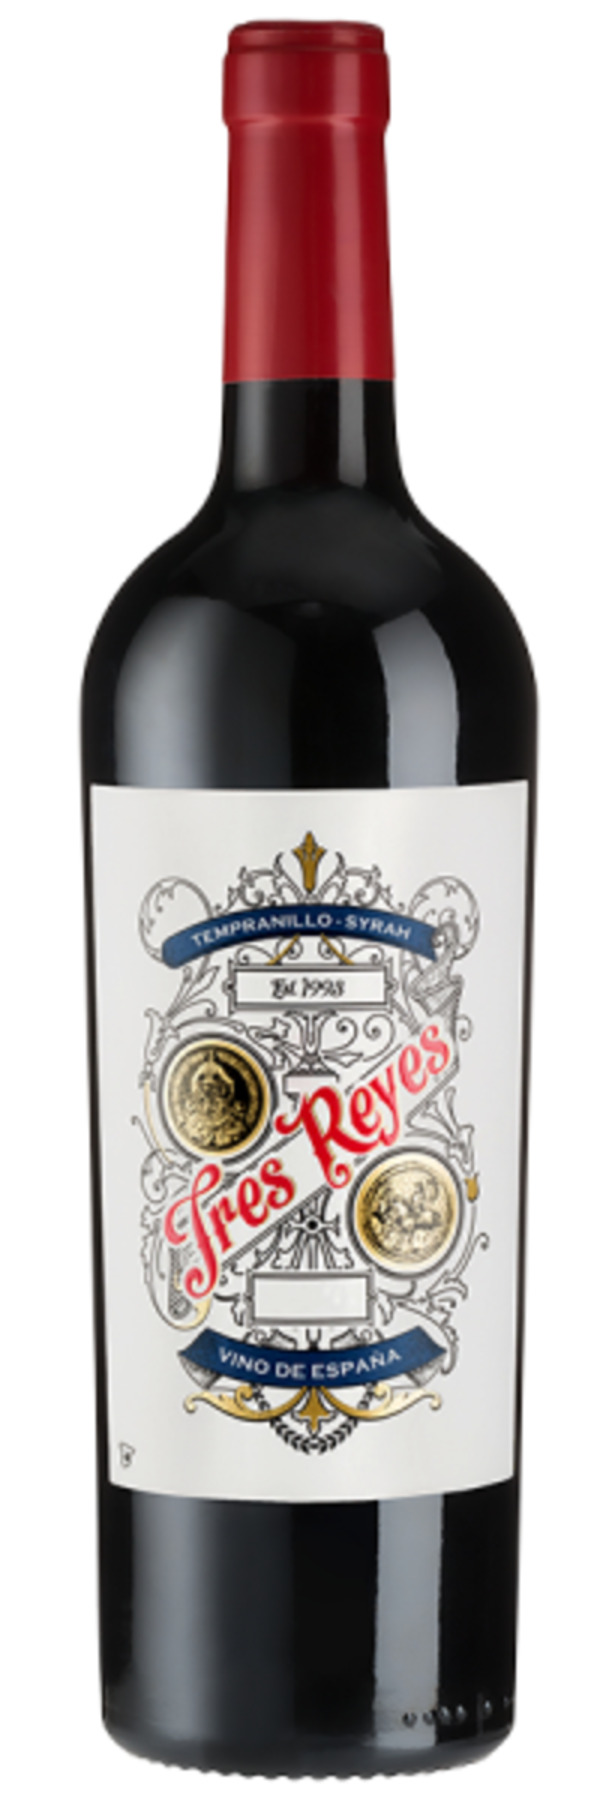 Bild 1 von Tres Reyes Tempranillo-Syrah - 2020 - Bodegas Tres Reyes - Spanischer Rotwein